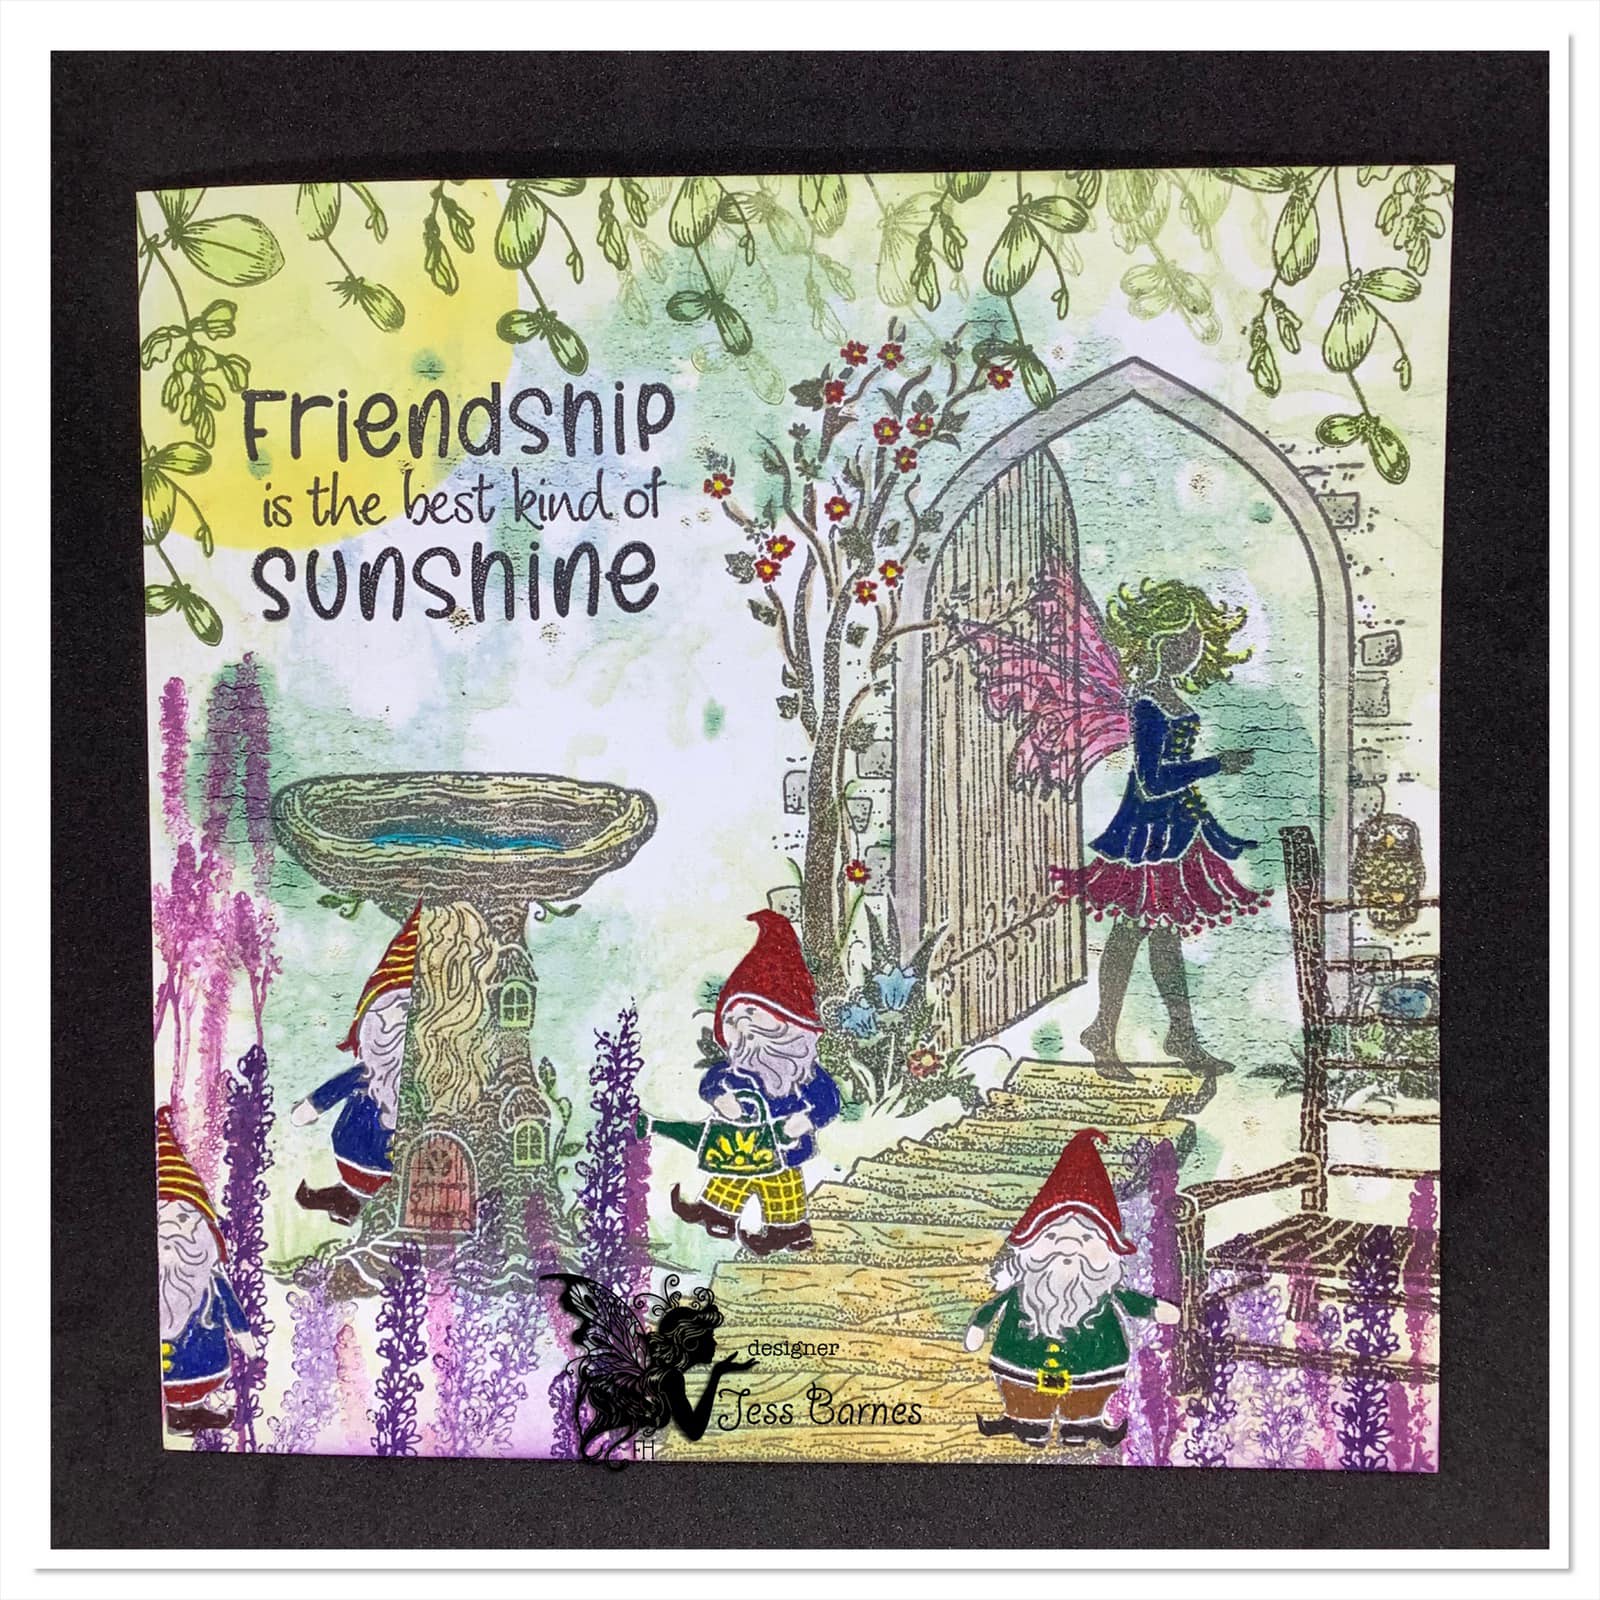 Fairy Hugs Stamps - Garden Gnomes